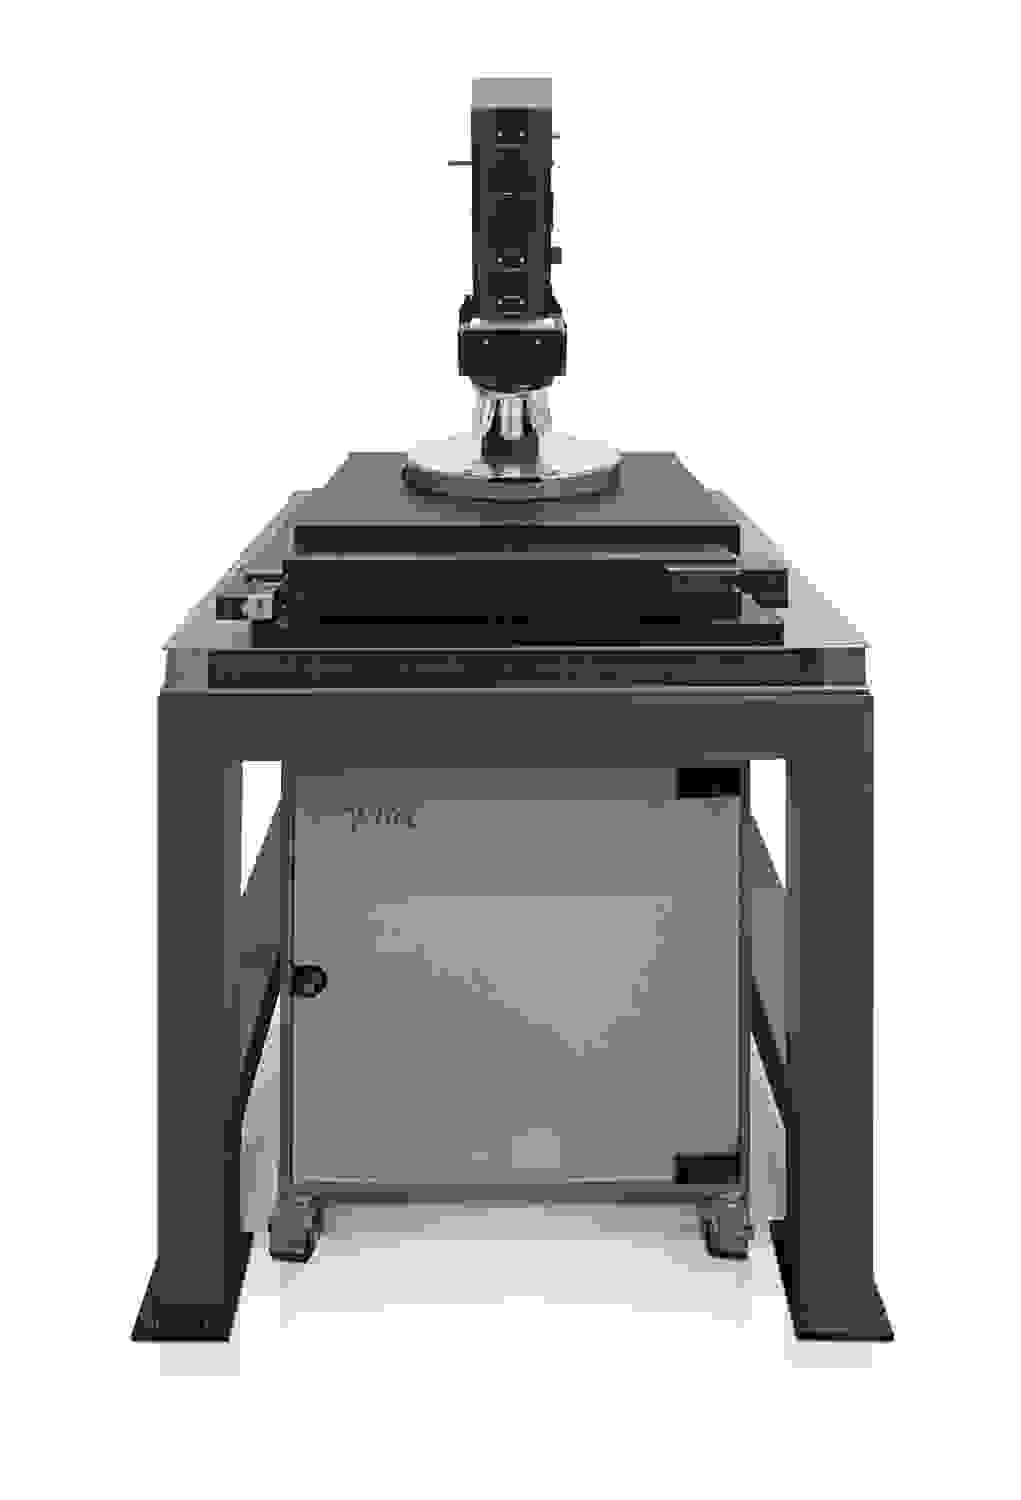 alpha300 Semiconductor Edition – 专用于晶圆检测的共聚焦拉曼成像显微镜